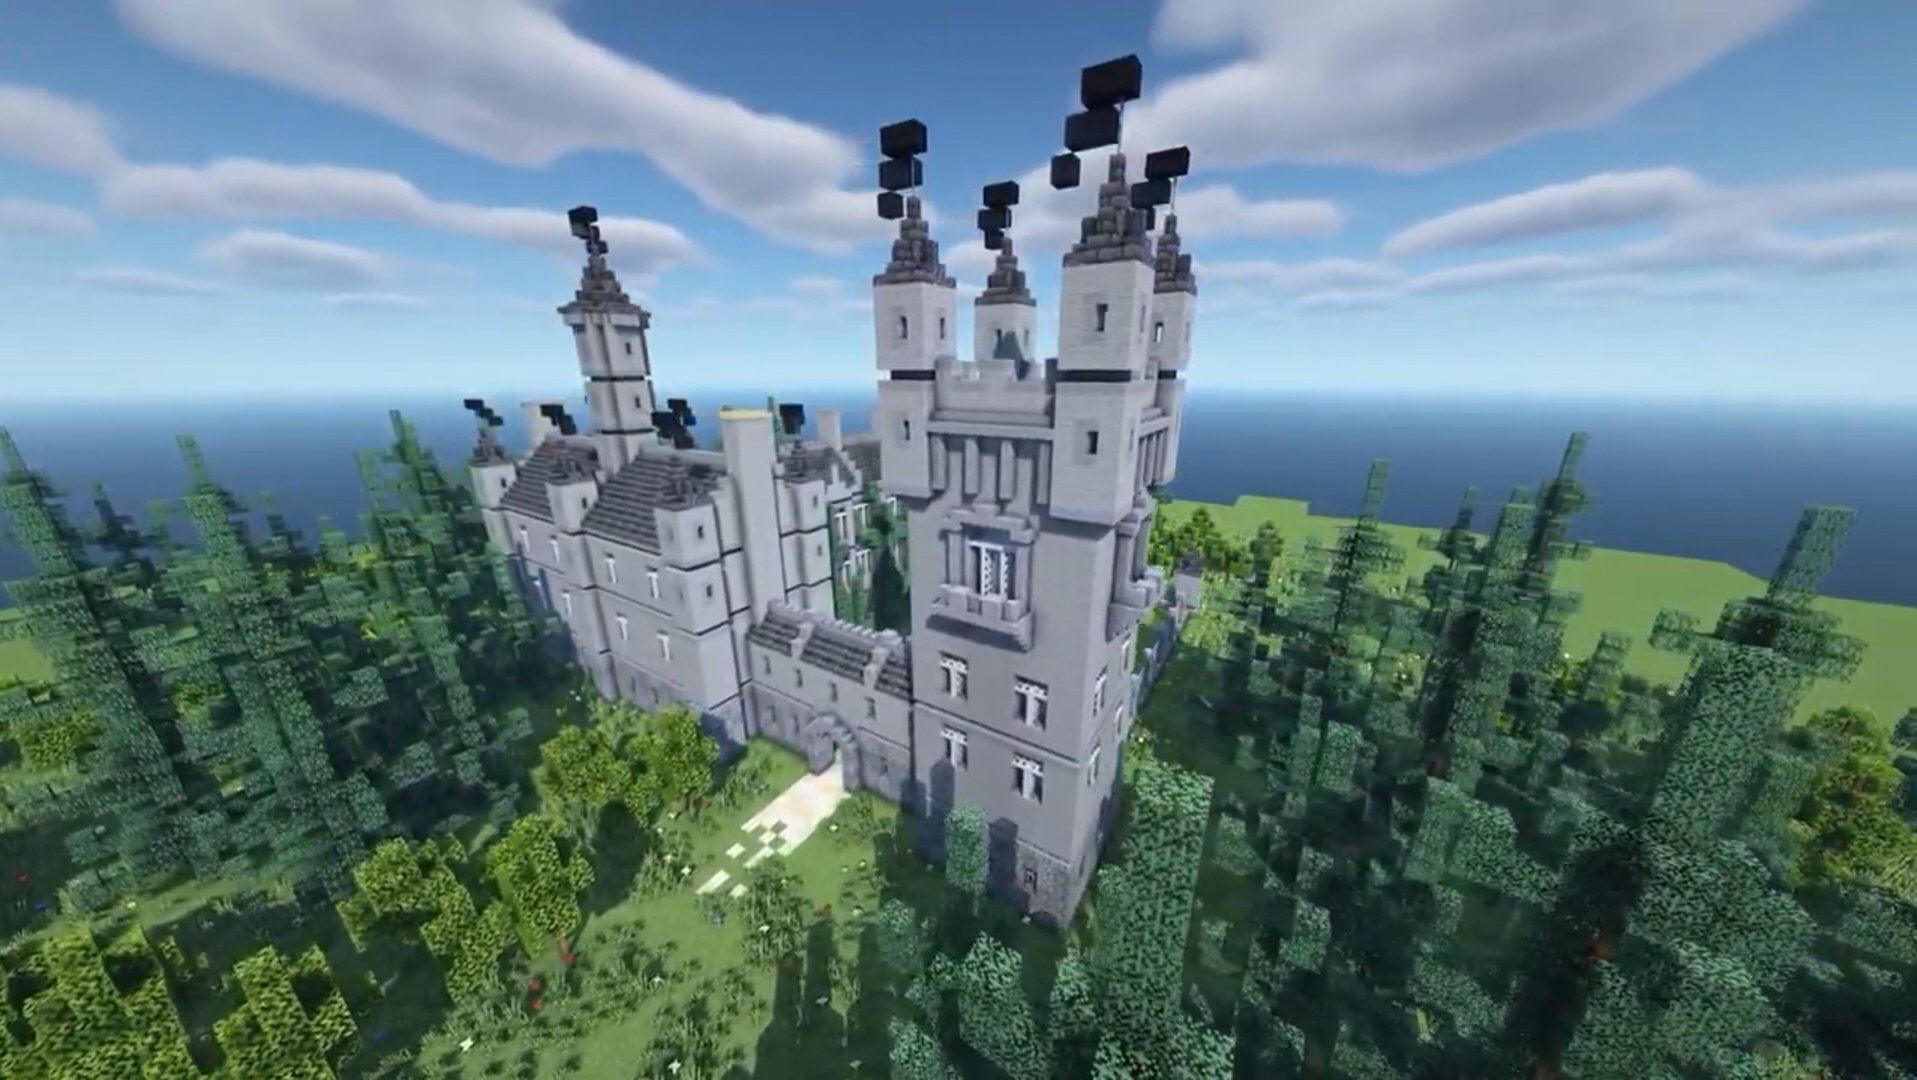 Minecraft Castles Designs